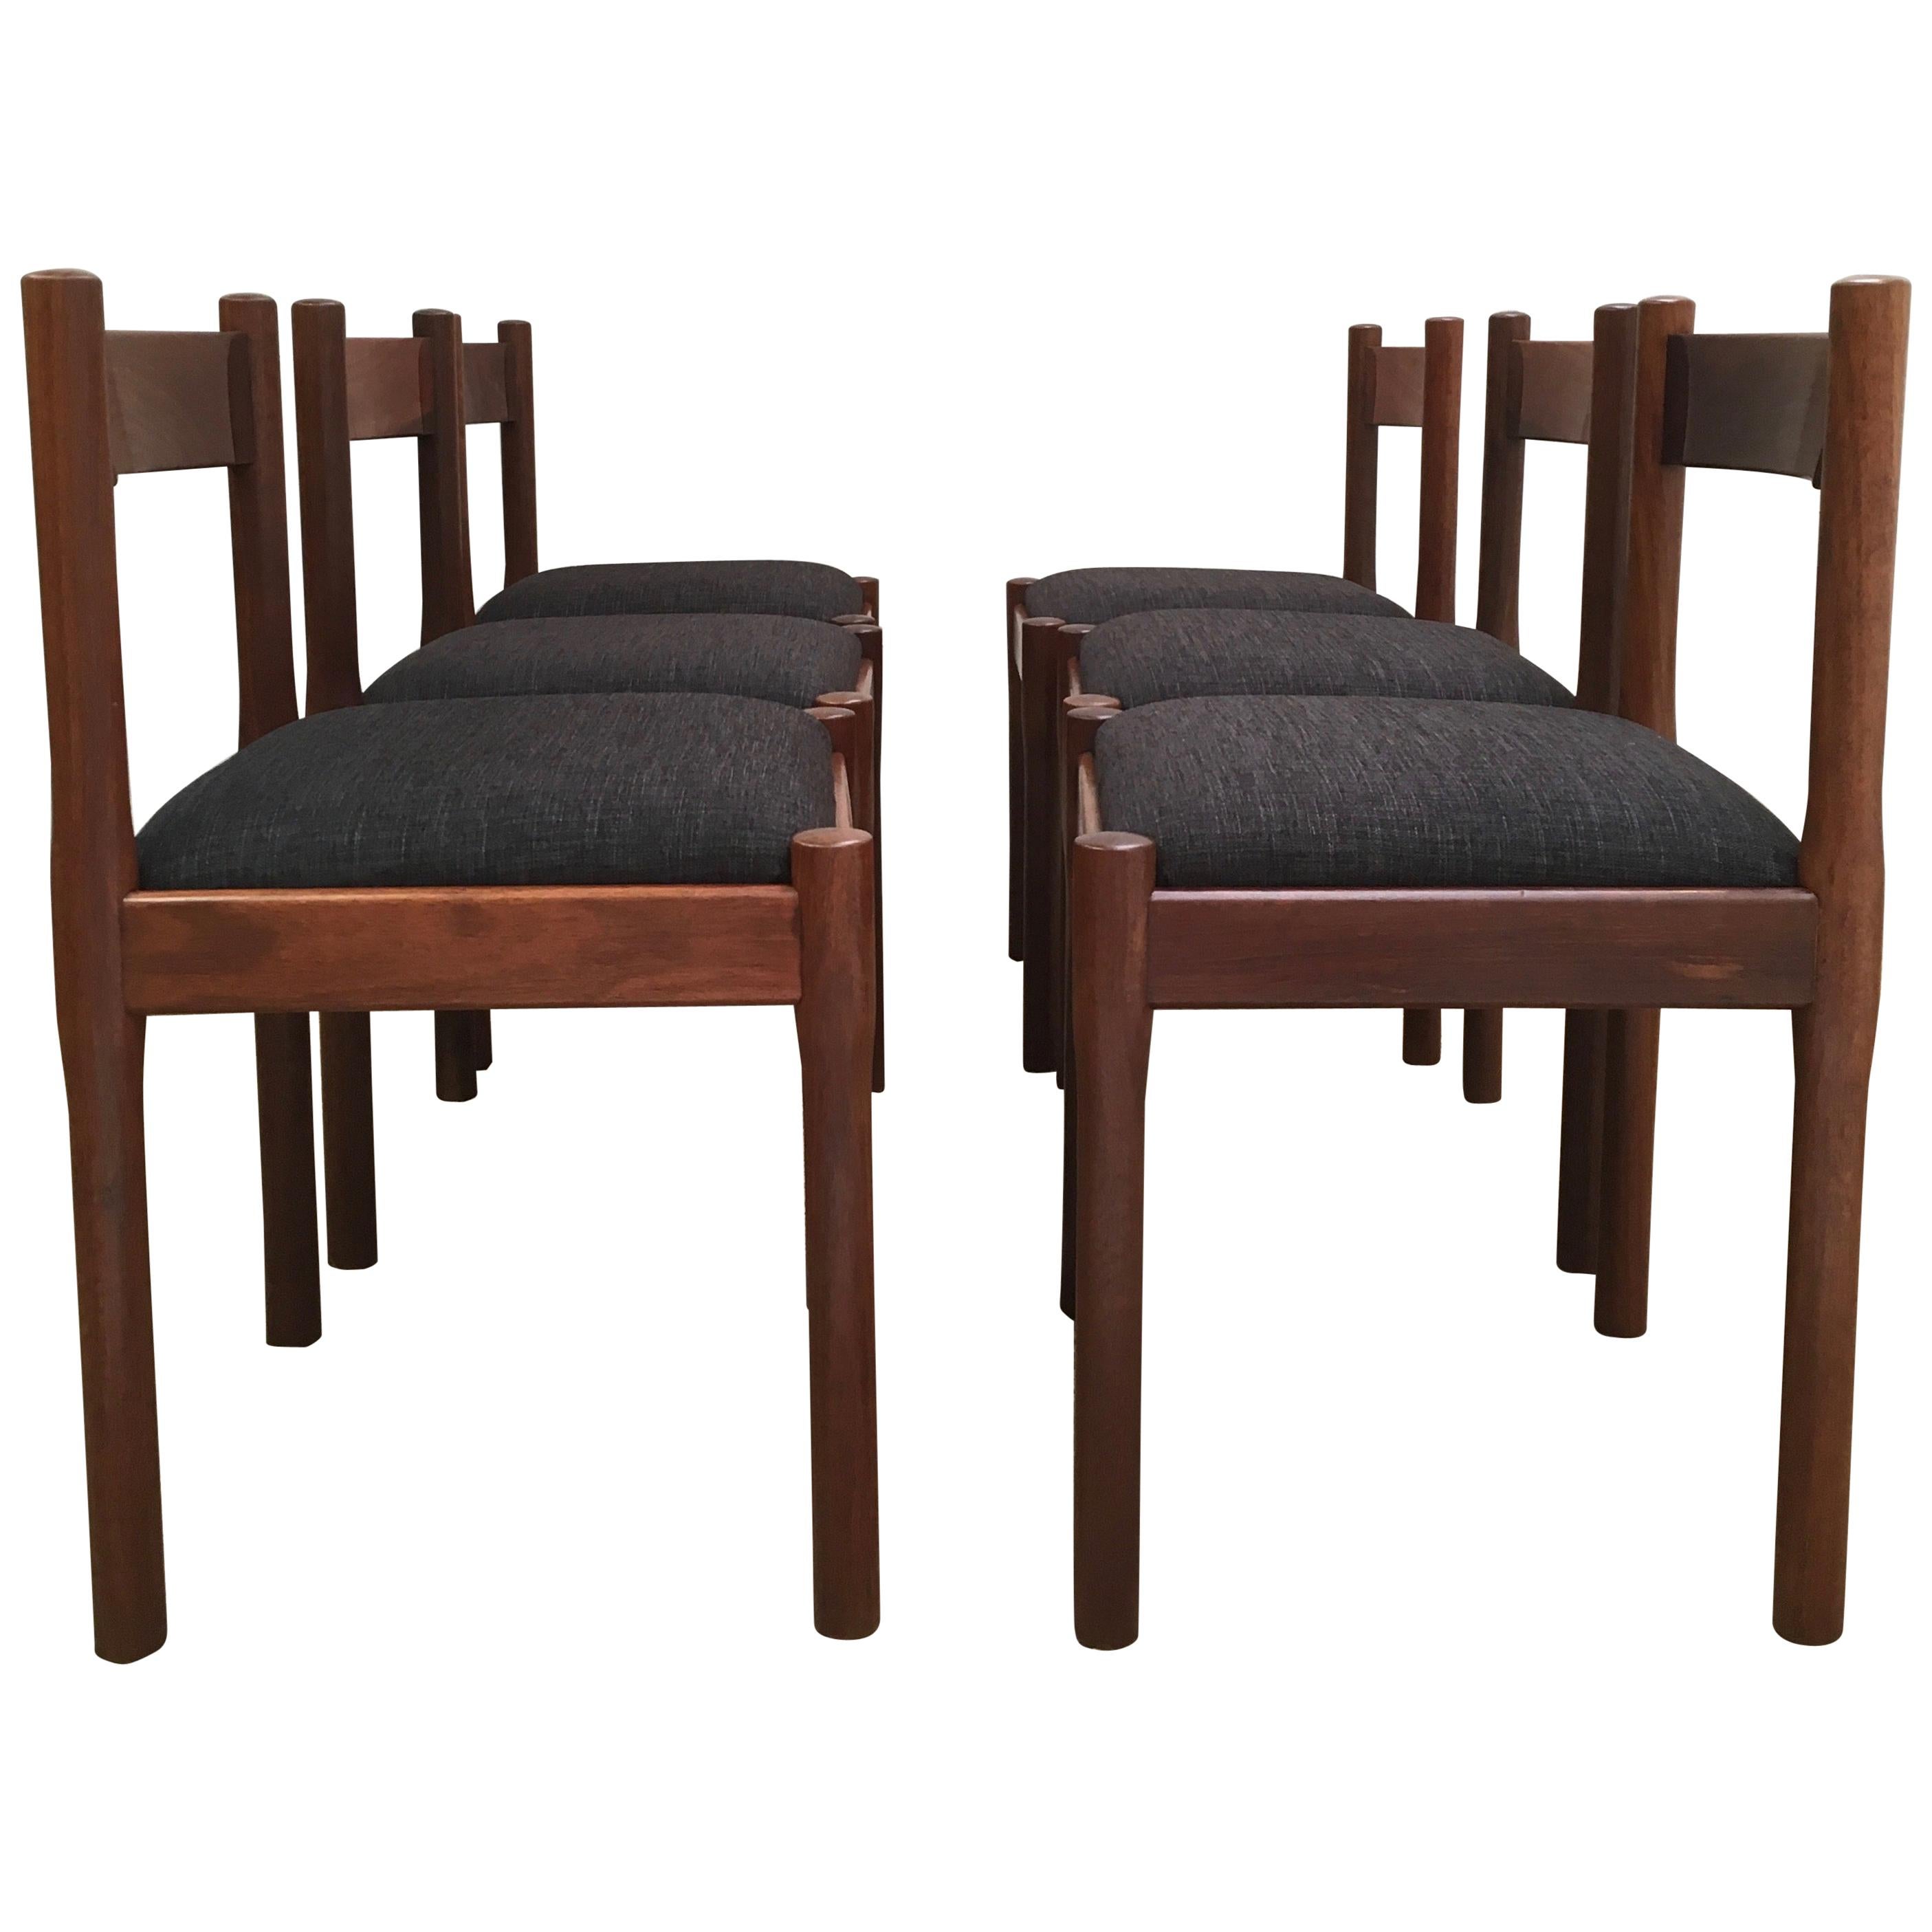 6 Carimate Chairs Magistretti , Copies by CATT Furniture, 1967 In Jarrah Timber